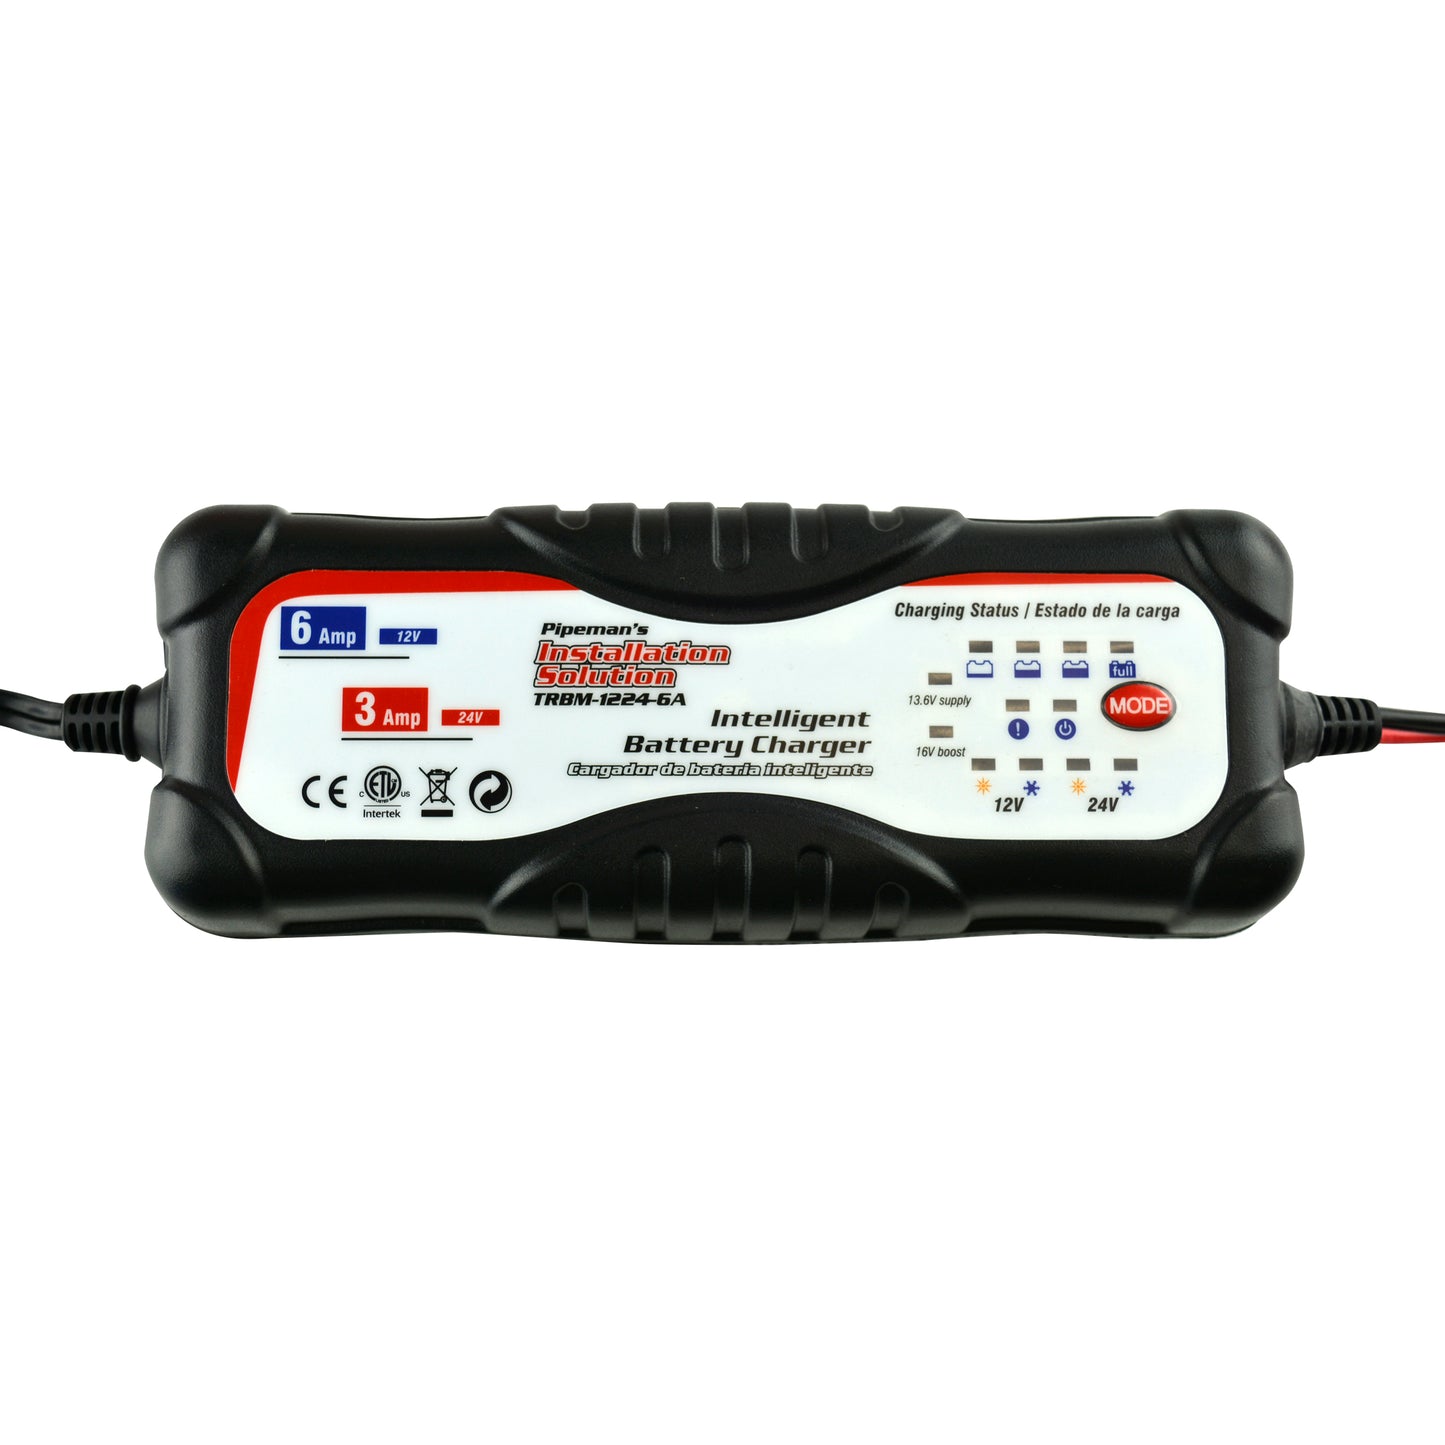 Intelligent Battery Charger (TRBM-1224-6A)